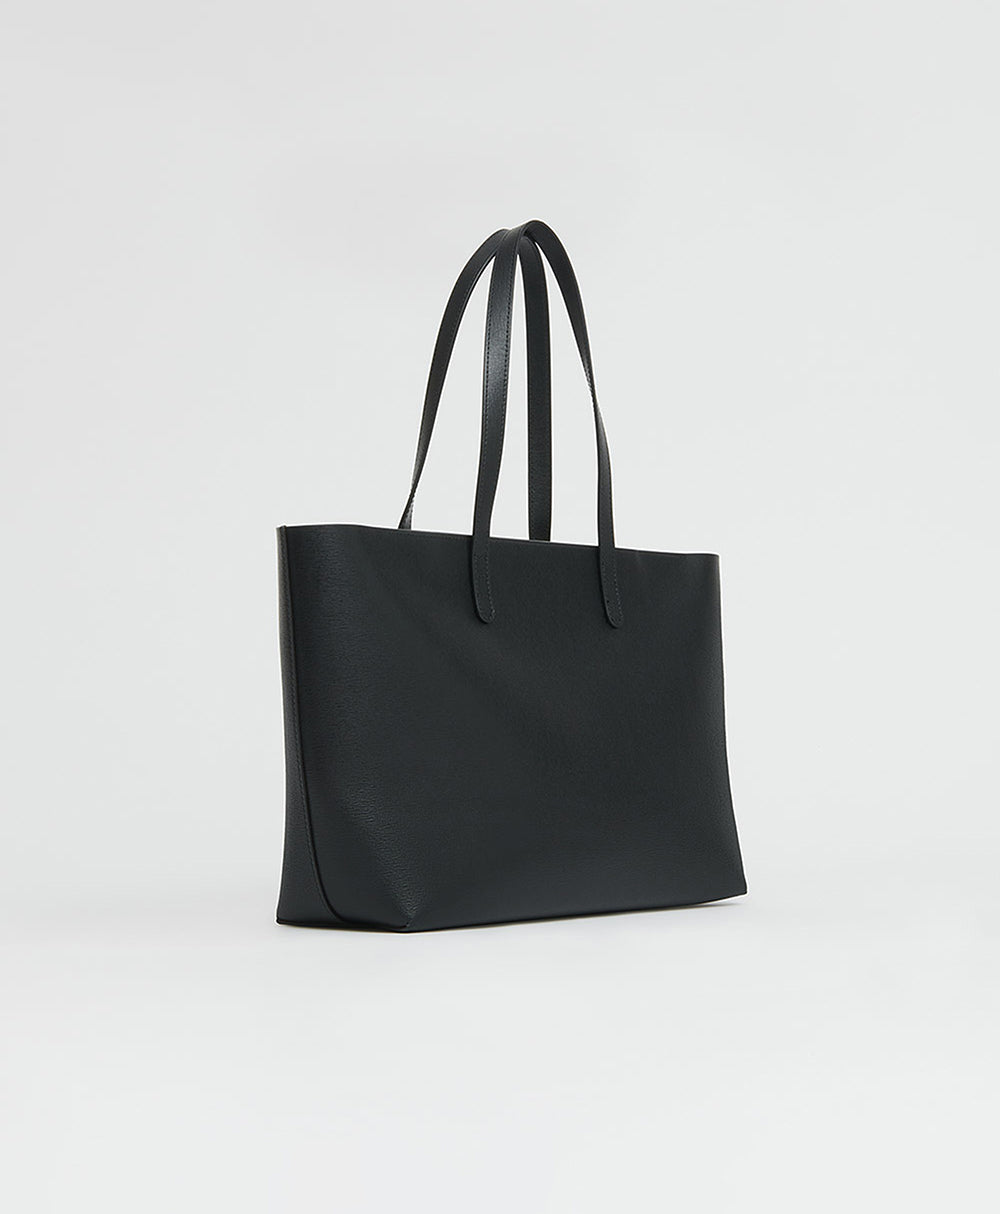 BASIC CITY BAG - View all - Bags - WOMAN | Bags, Zara handbags, Fancy bags